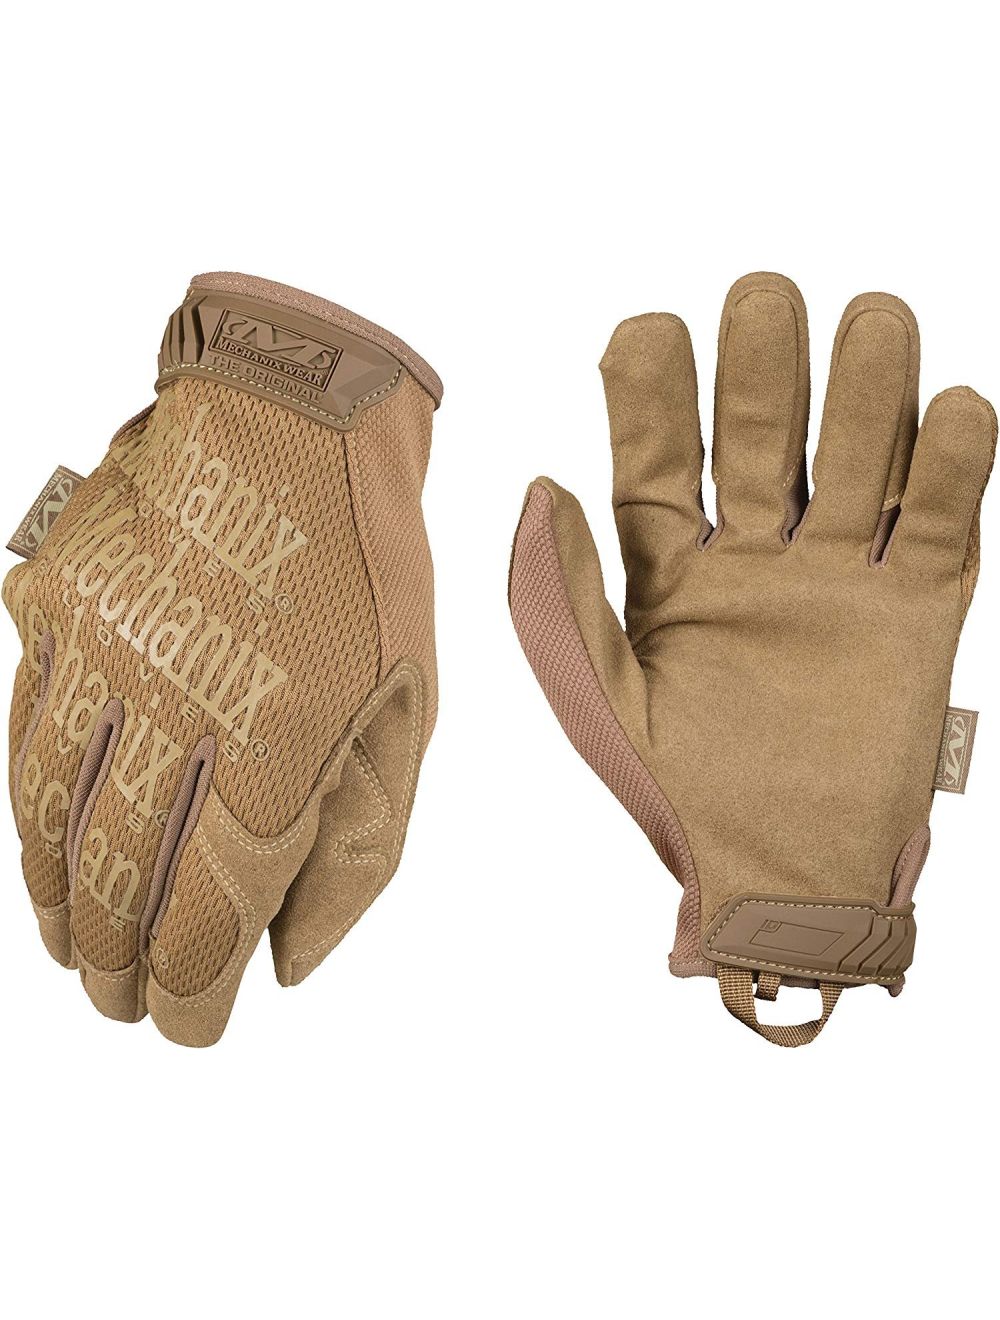 The Original Glove